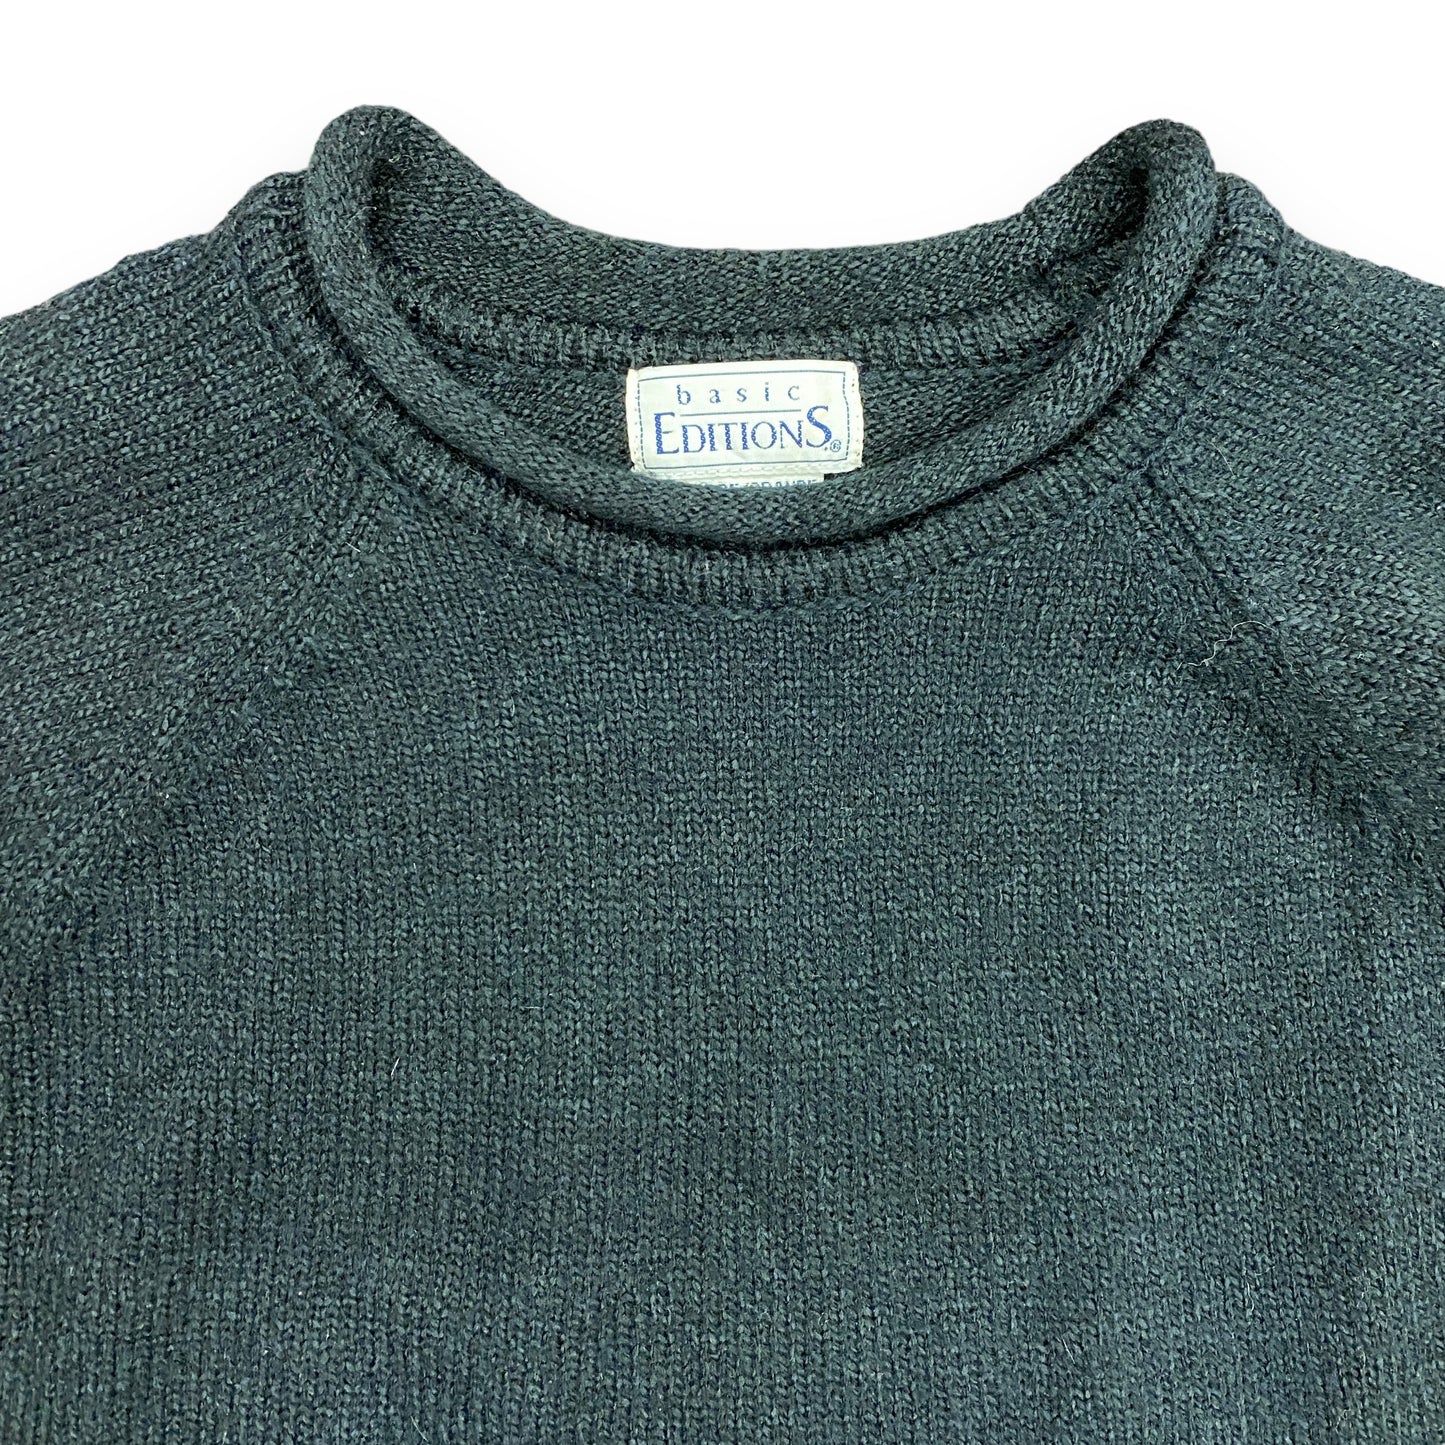 90s Rolled Neck Black Raglan Sweater - Size Large